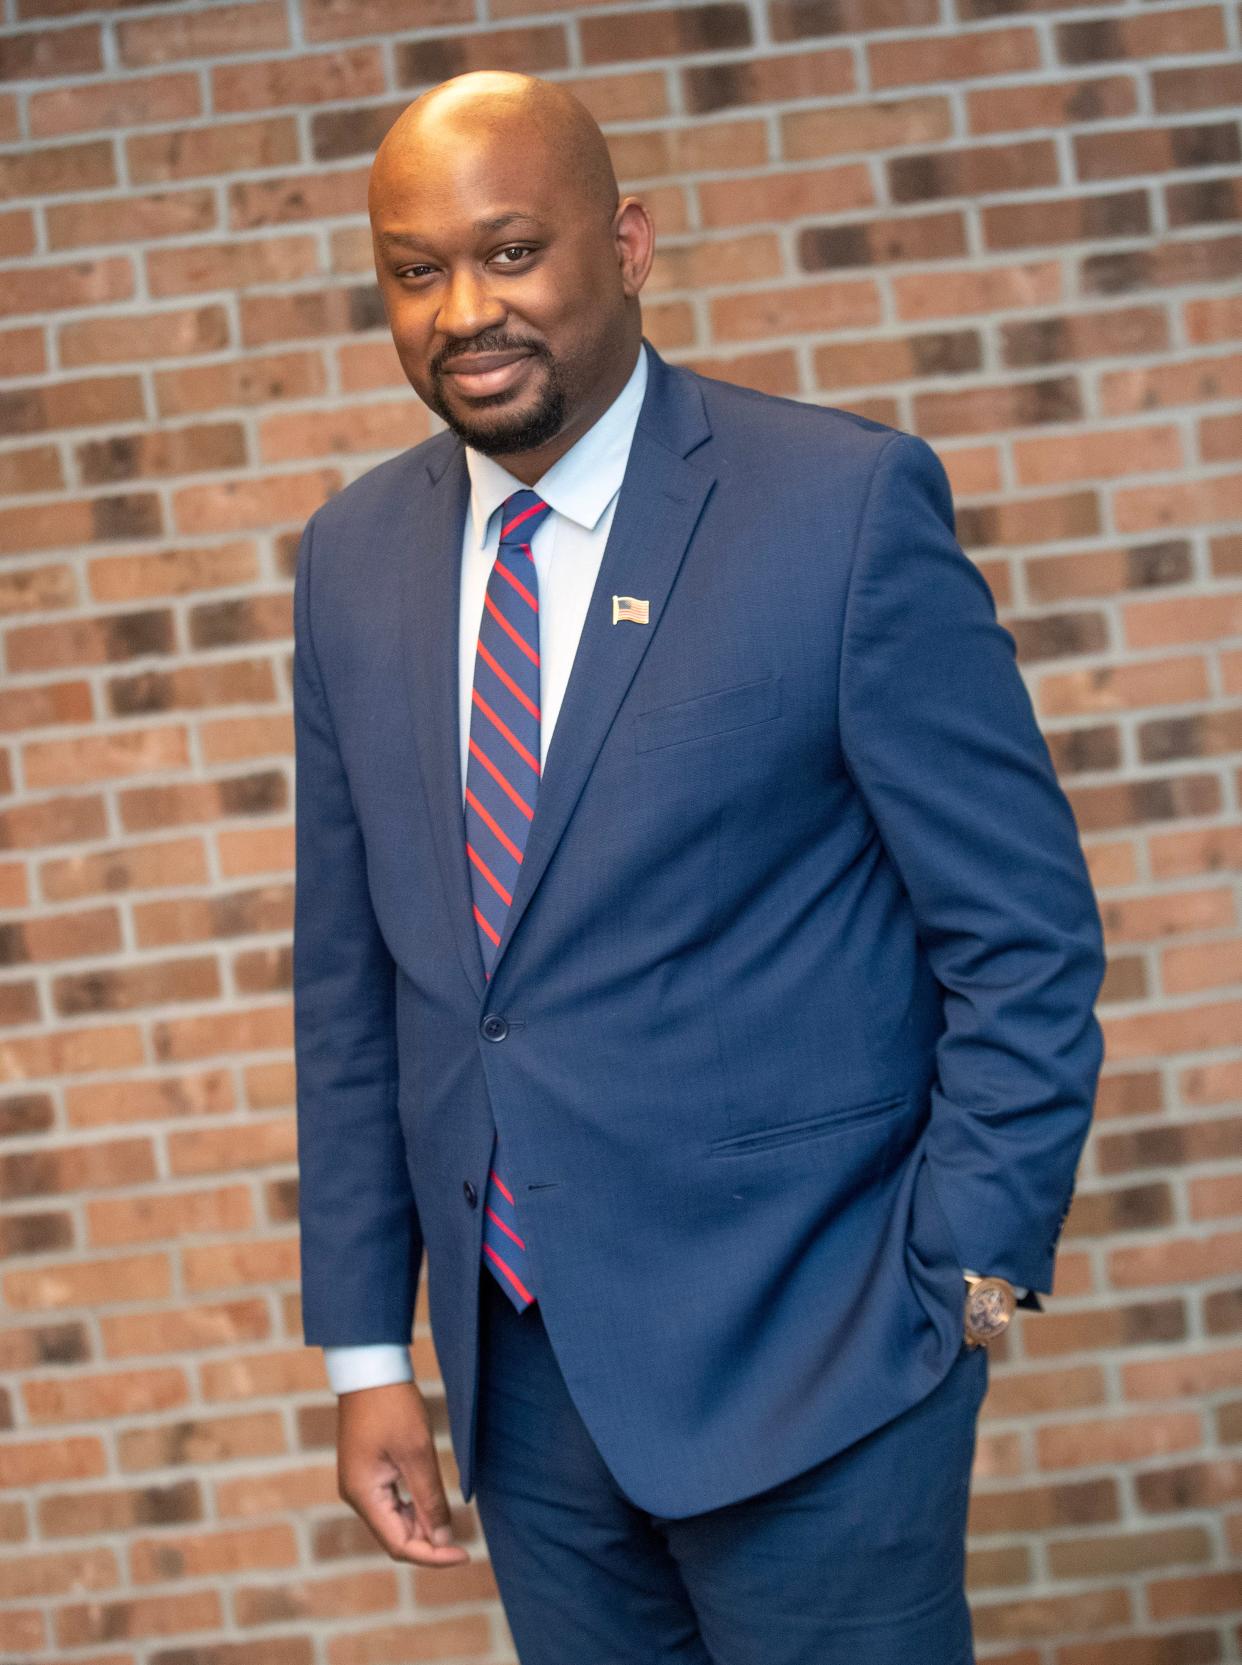 Willis Gordon is one of five Democratic candidates seeking to become mayor of Canton.